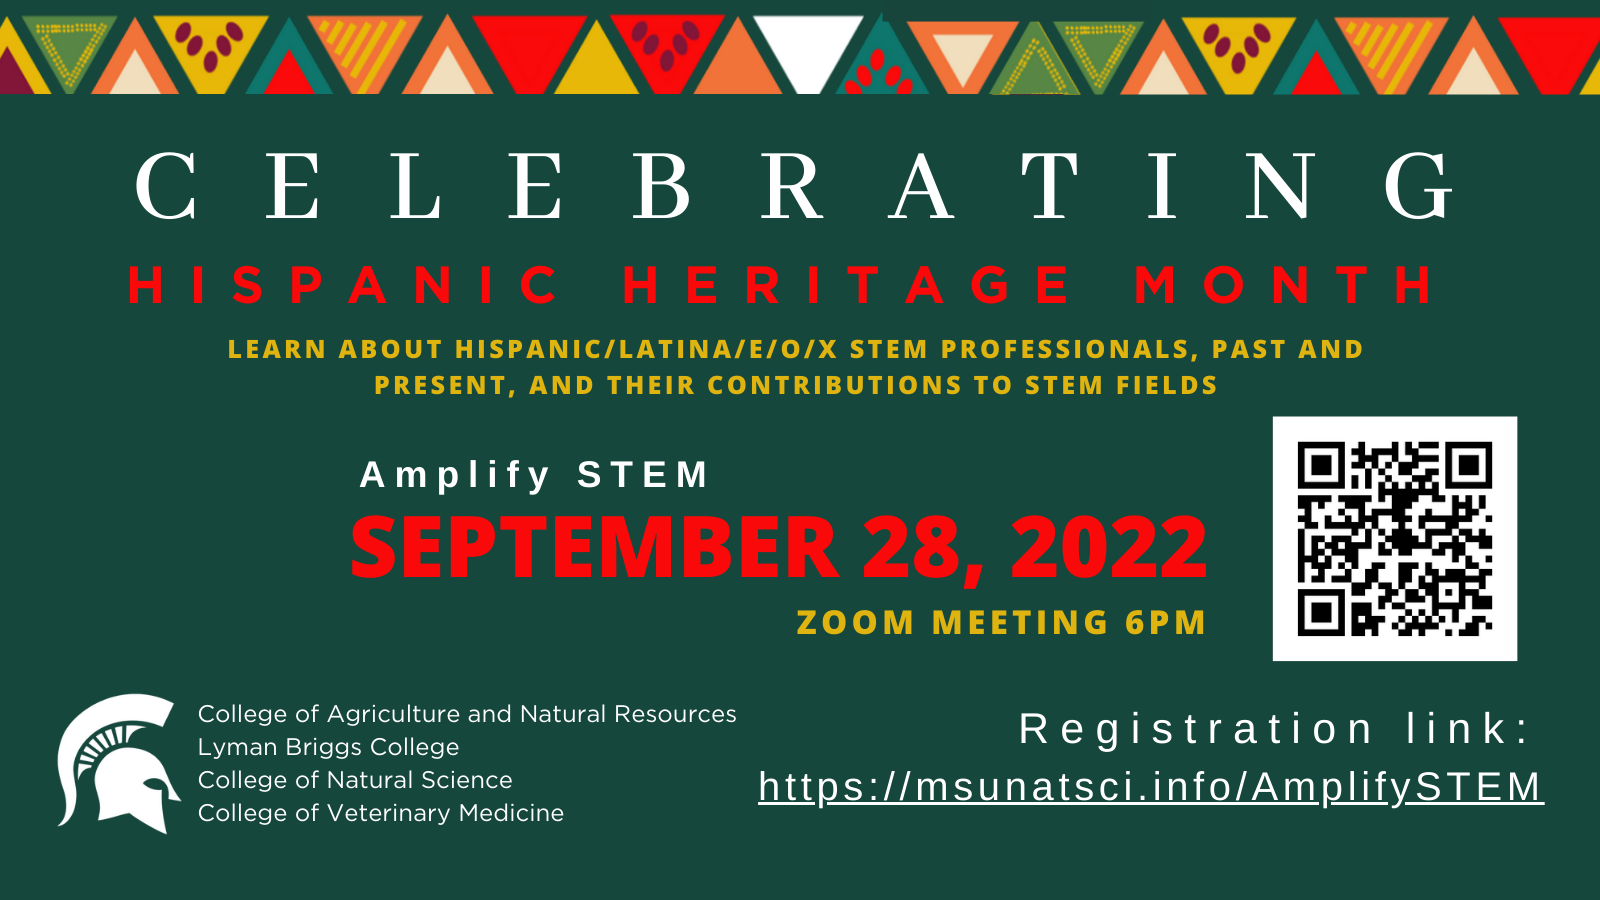 Flyer to advertise Amplify STEM Hispanic Heritage Month